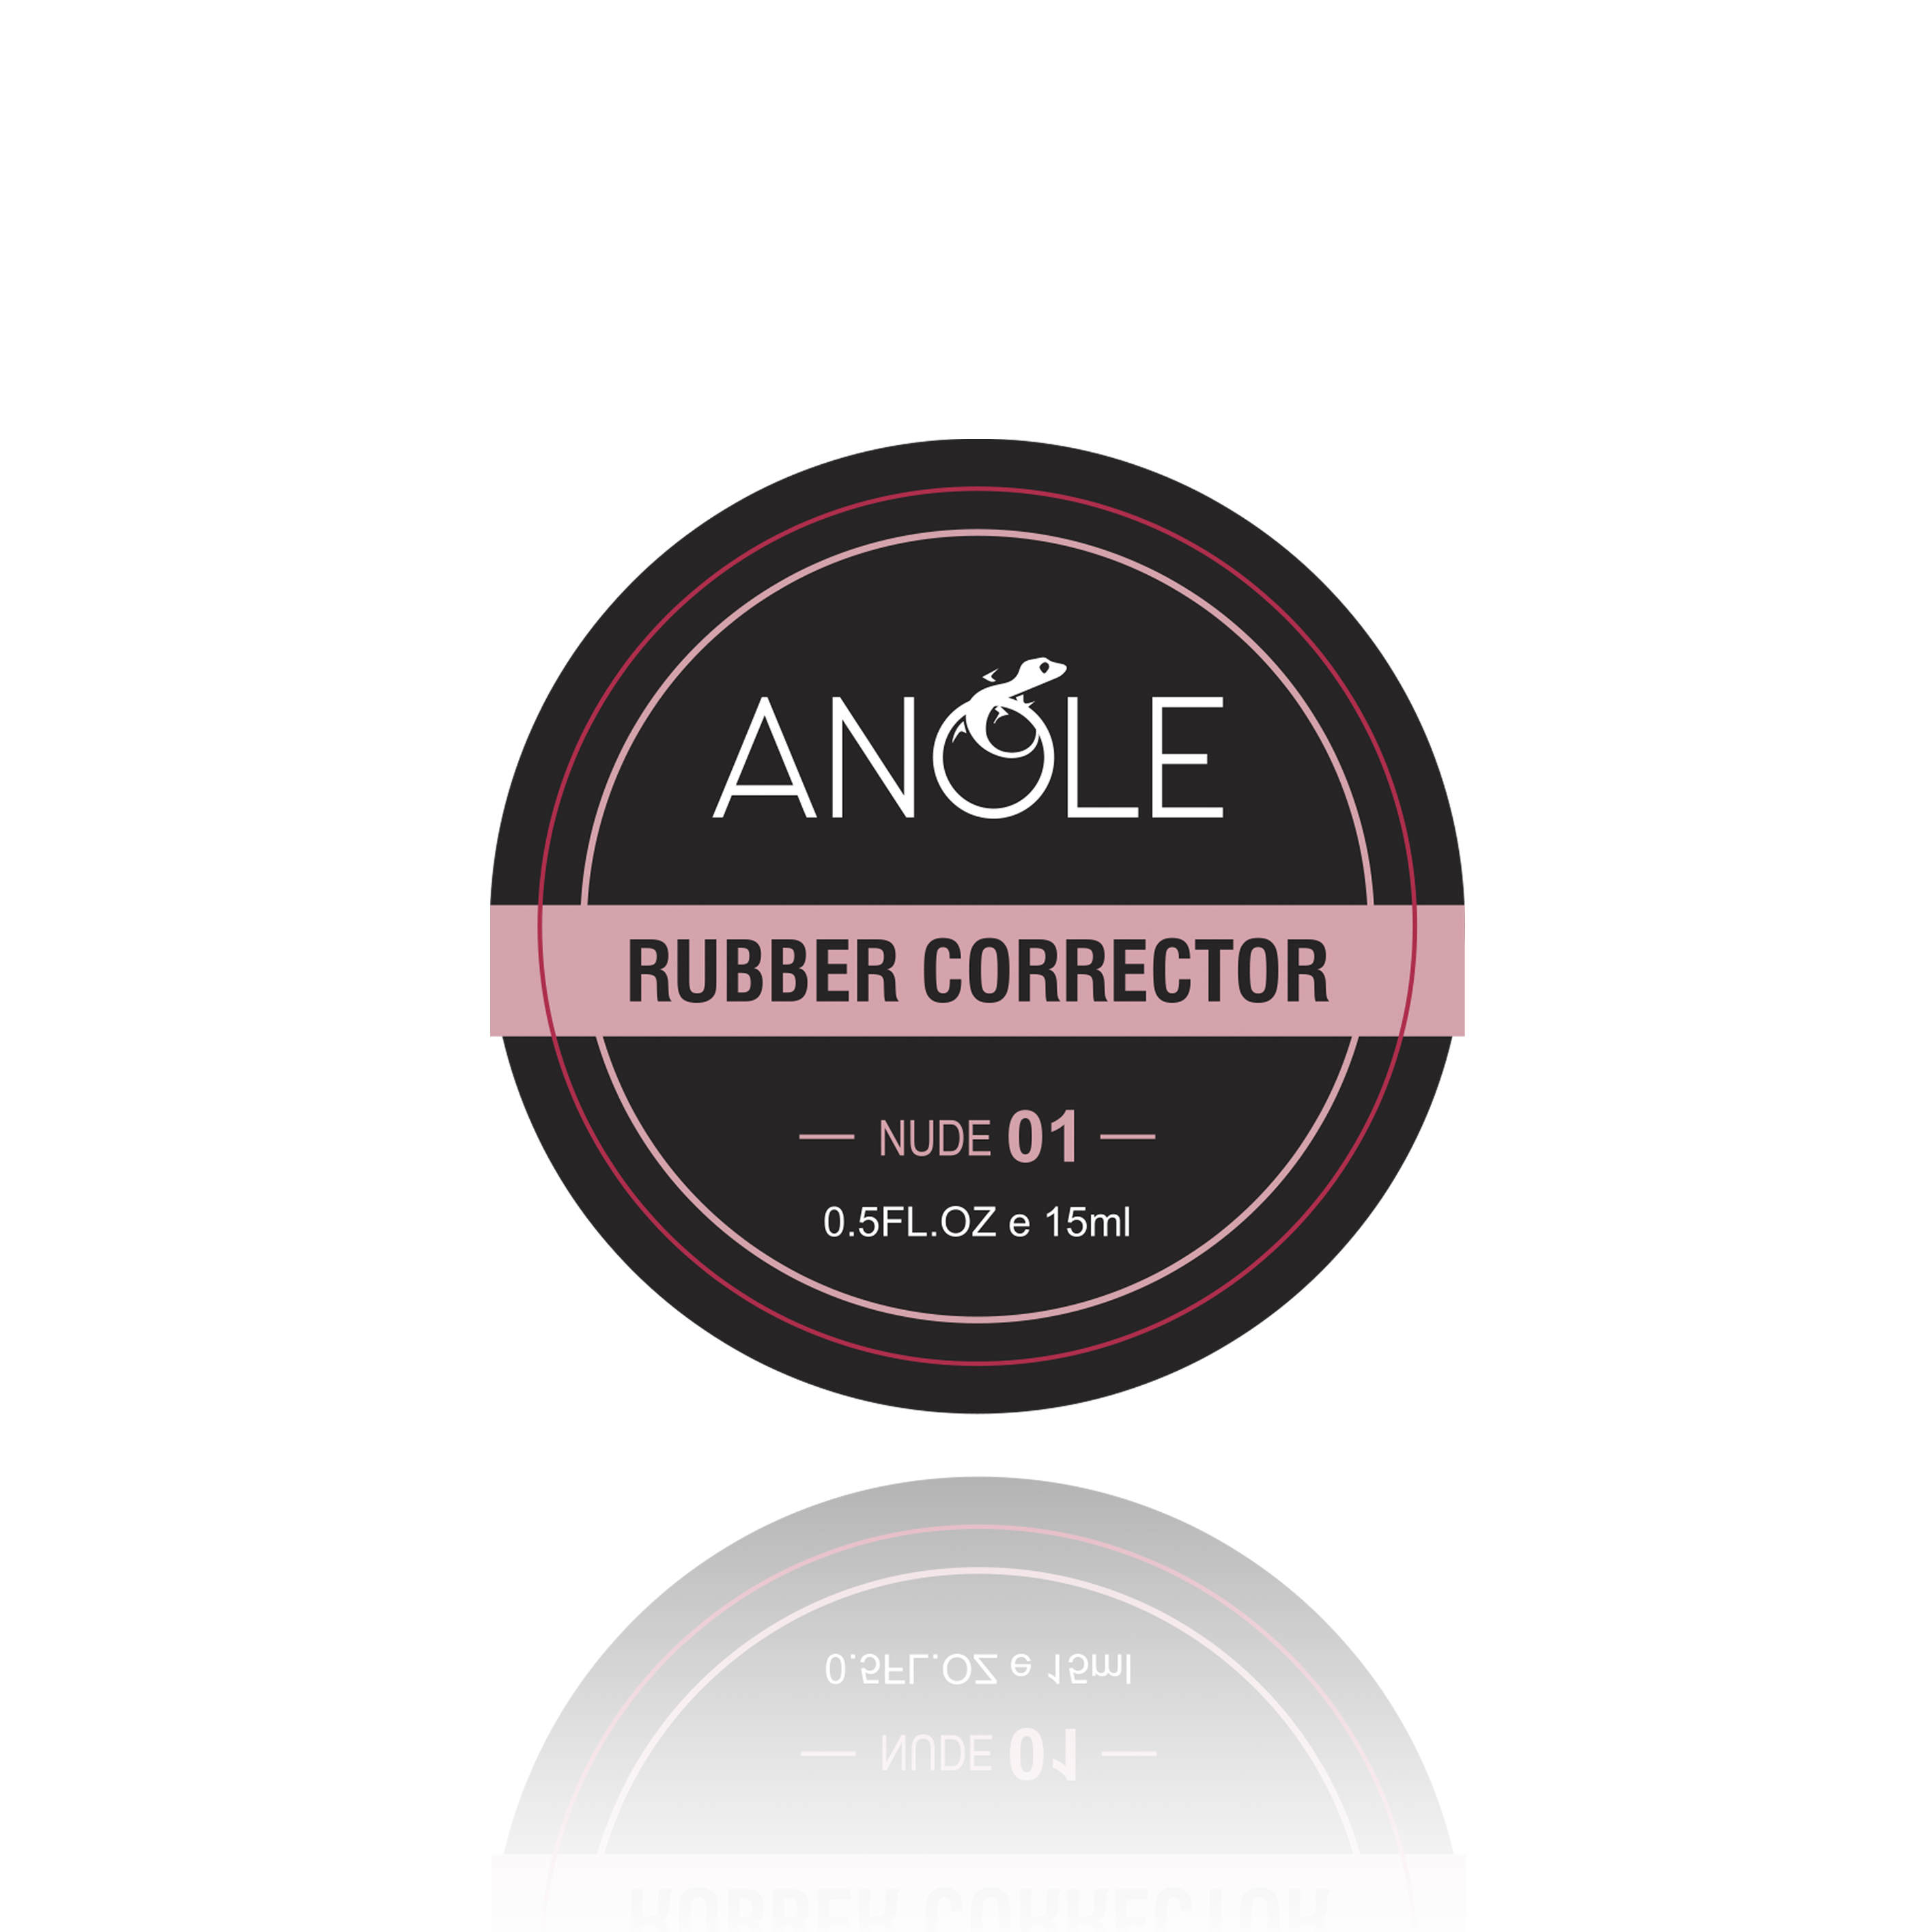 Anole rubber corrector nude 1